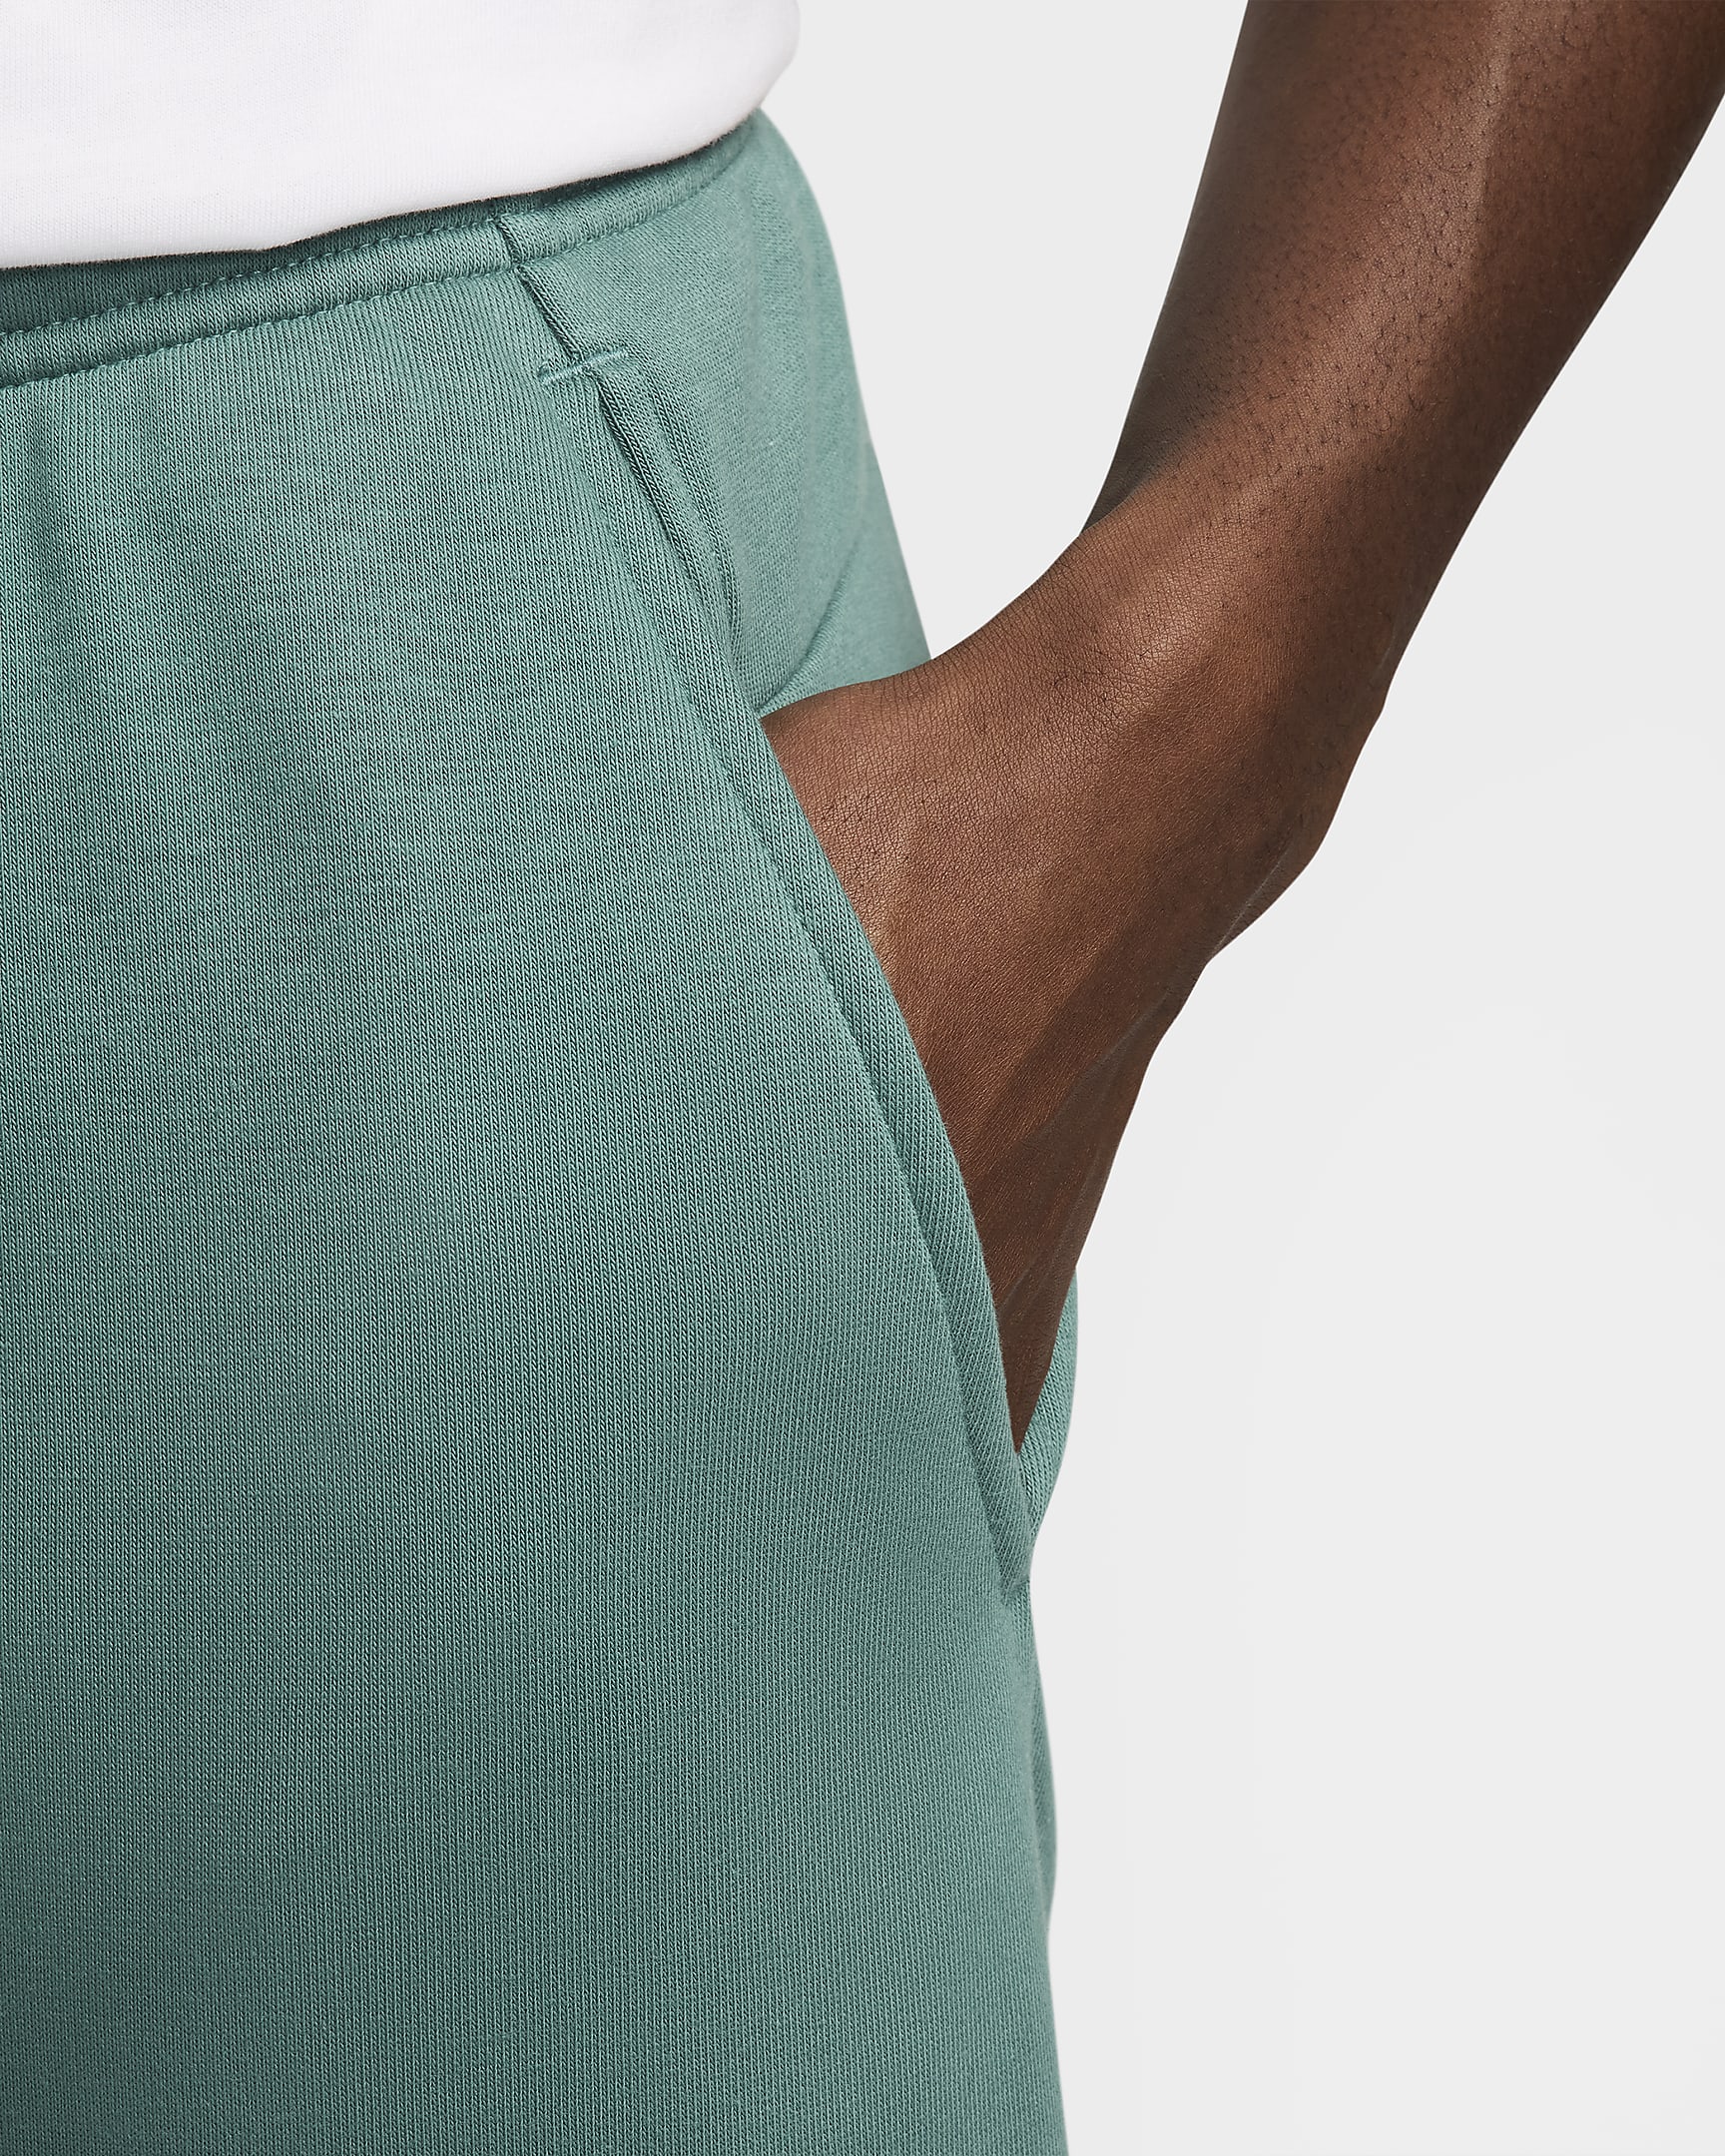 Pantaloni fitness Dri-FIT affusolati Nike Dry Graphic – Uomo - Bicoastal/Nero